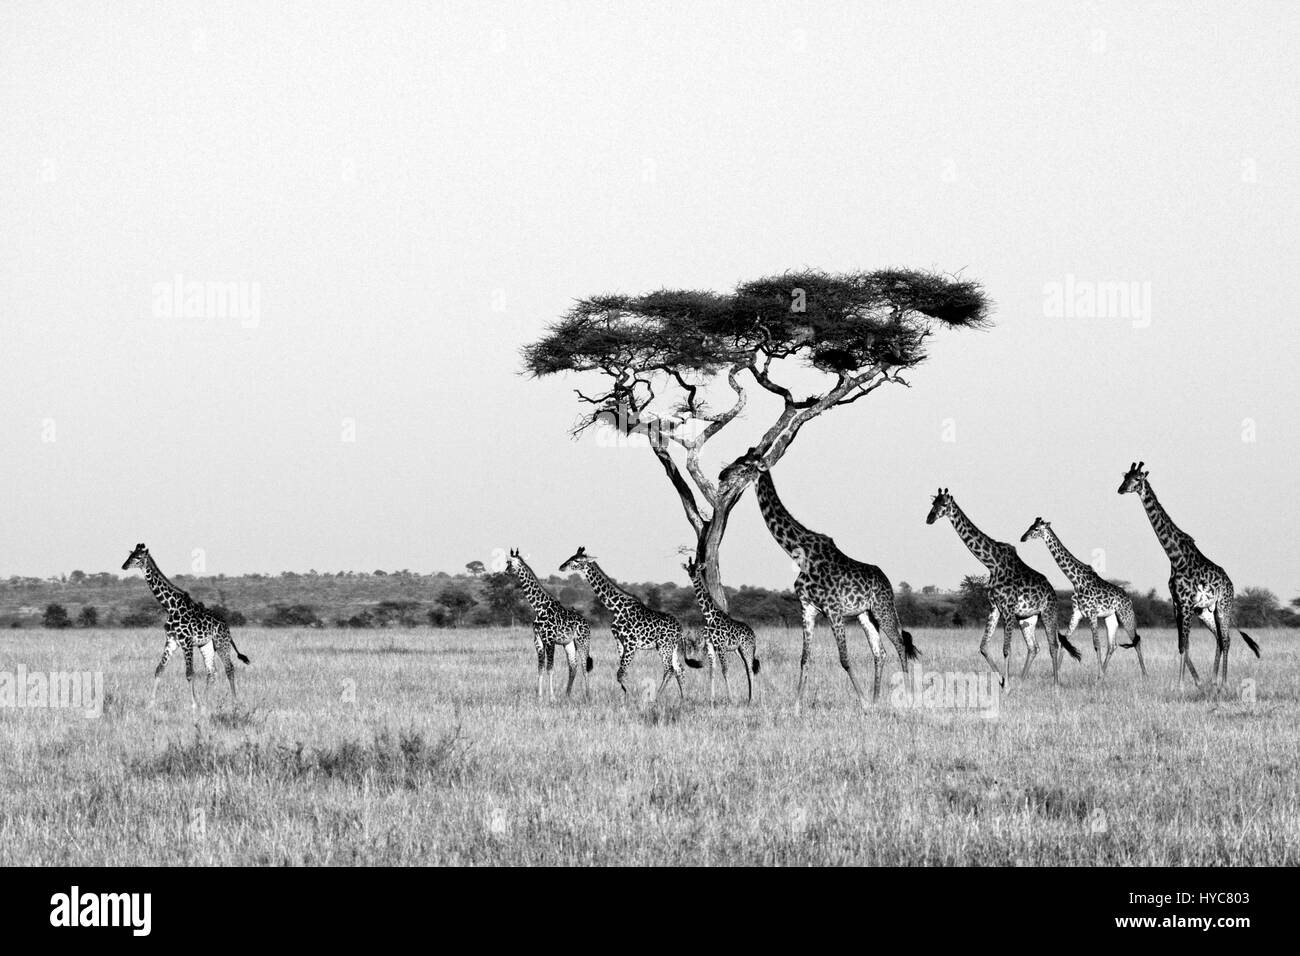 Les Girafes walking in serengeti national park, Tanzania, Africa Banque D'Images